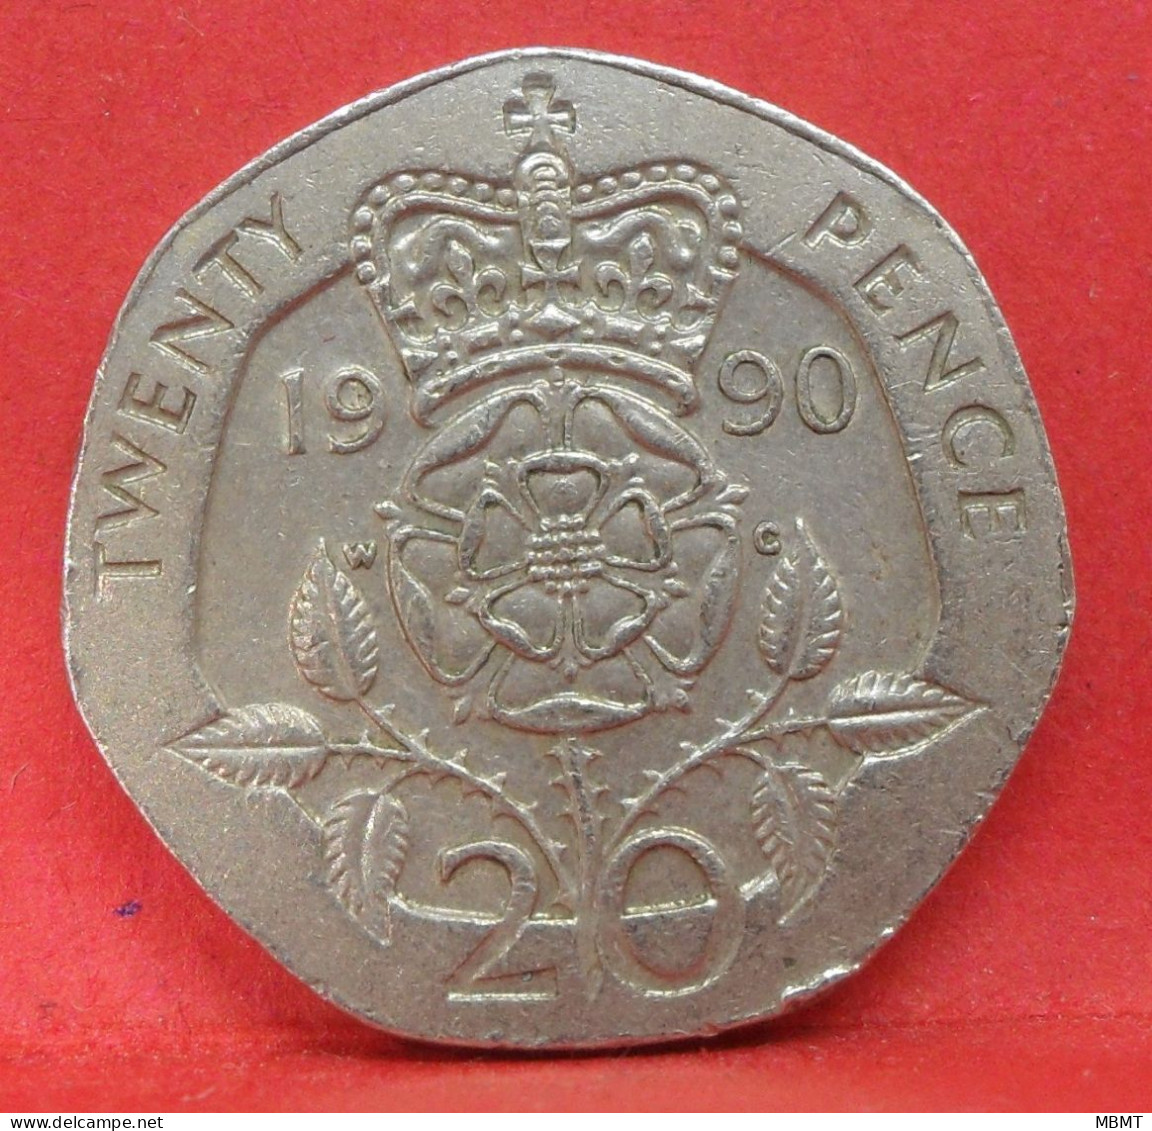 20 Pence 1990 - TTB - Pièce Monnaie Grande-Bretagne - Article N°2831 - 20 Pence